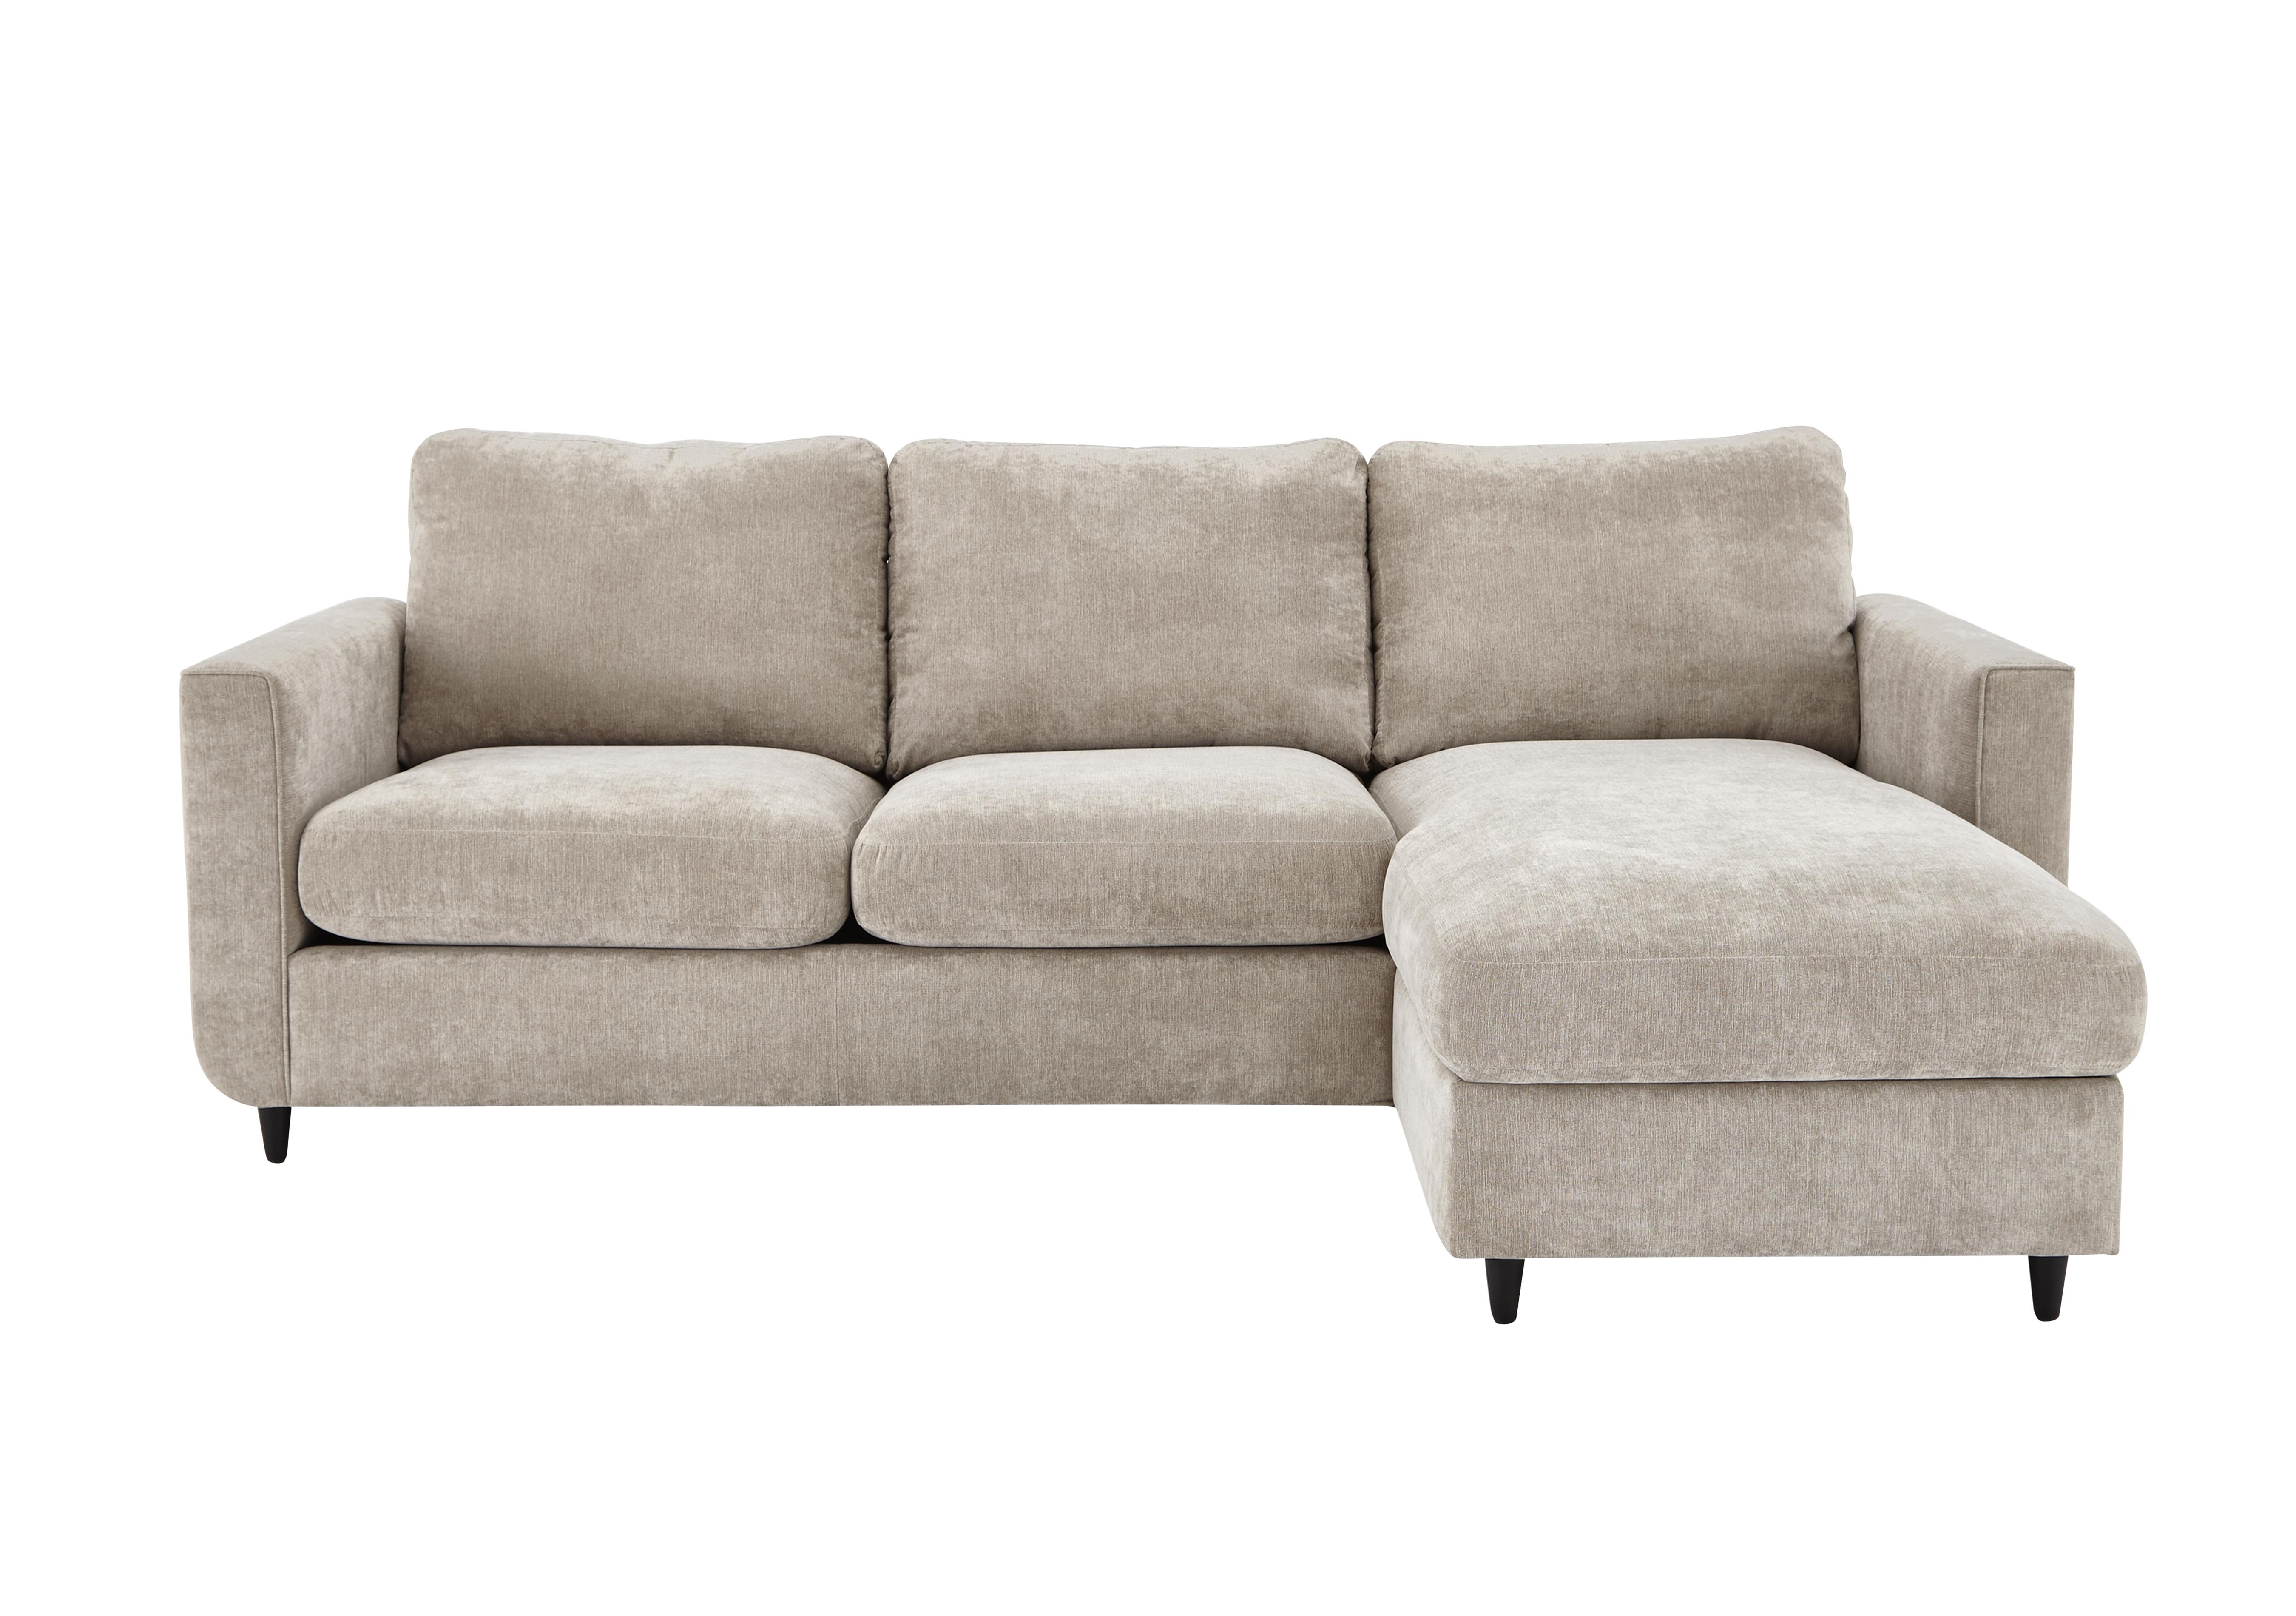 Esprit Fabric Corner Chaise with Storage in Silver Ebony Feet on Furniture Village